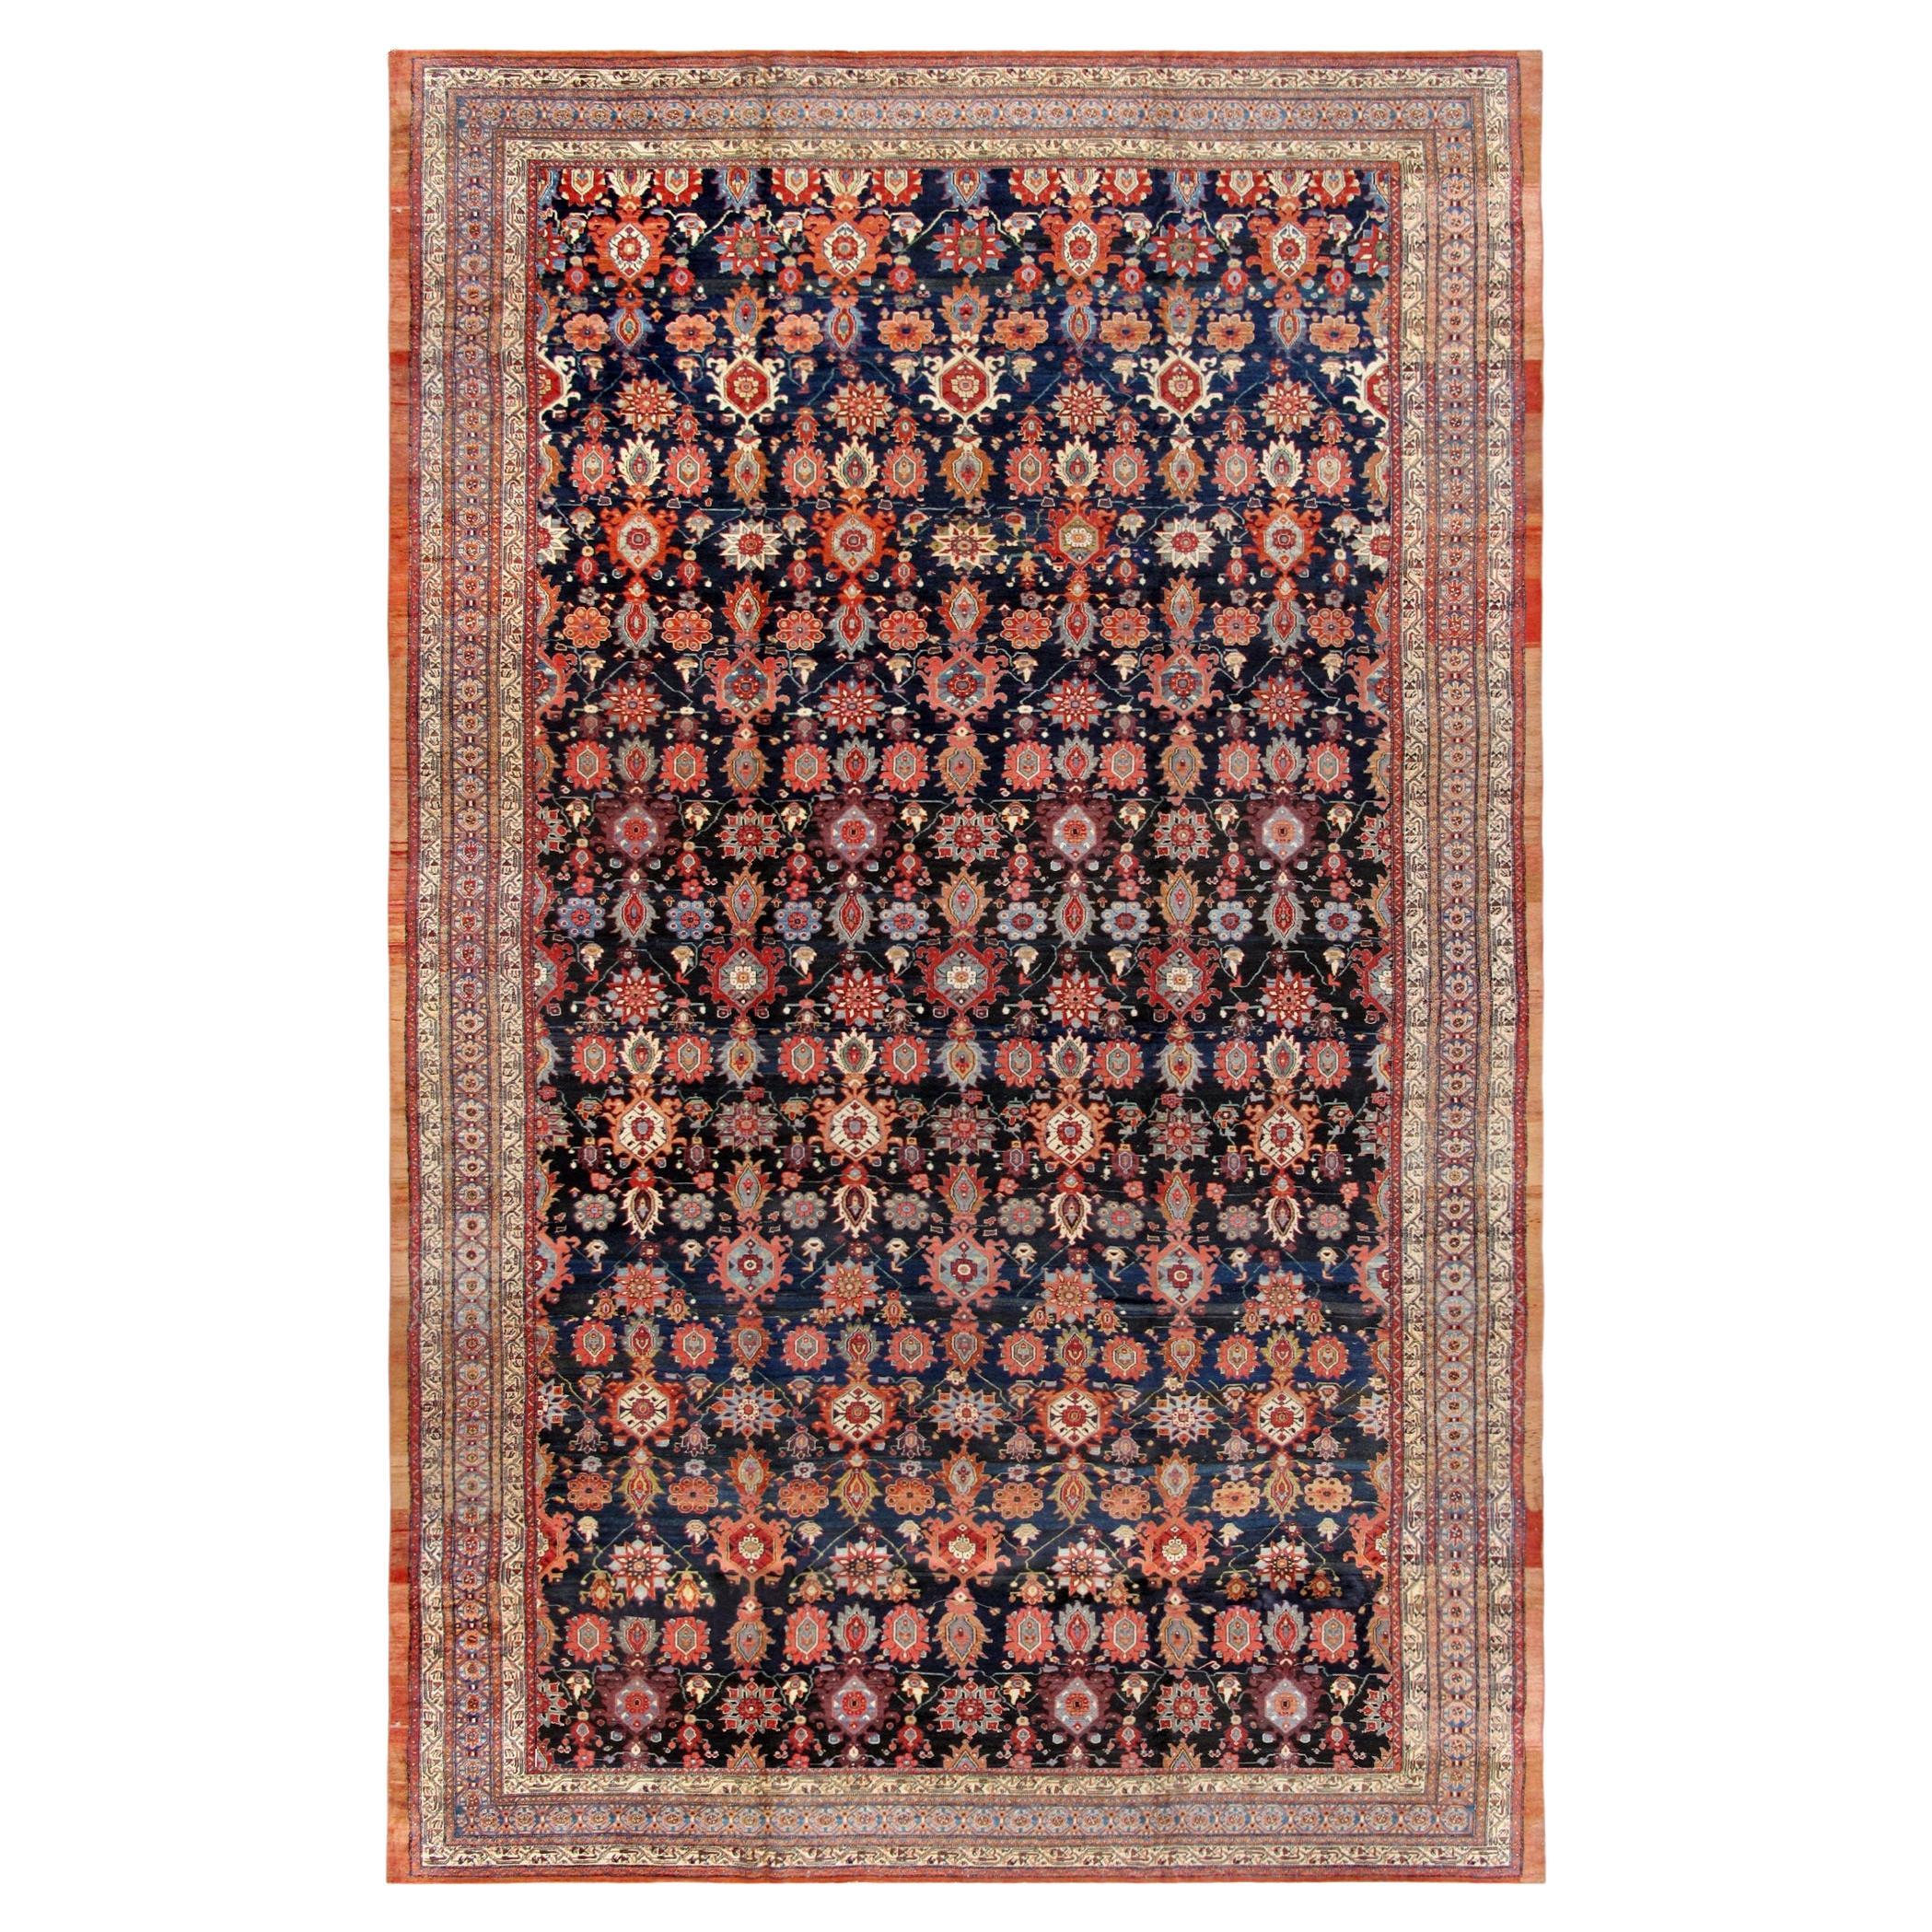 Antike Melody Kollektion Marinefarbener Teppich aus Lammwolle